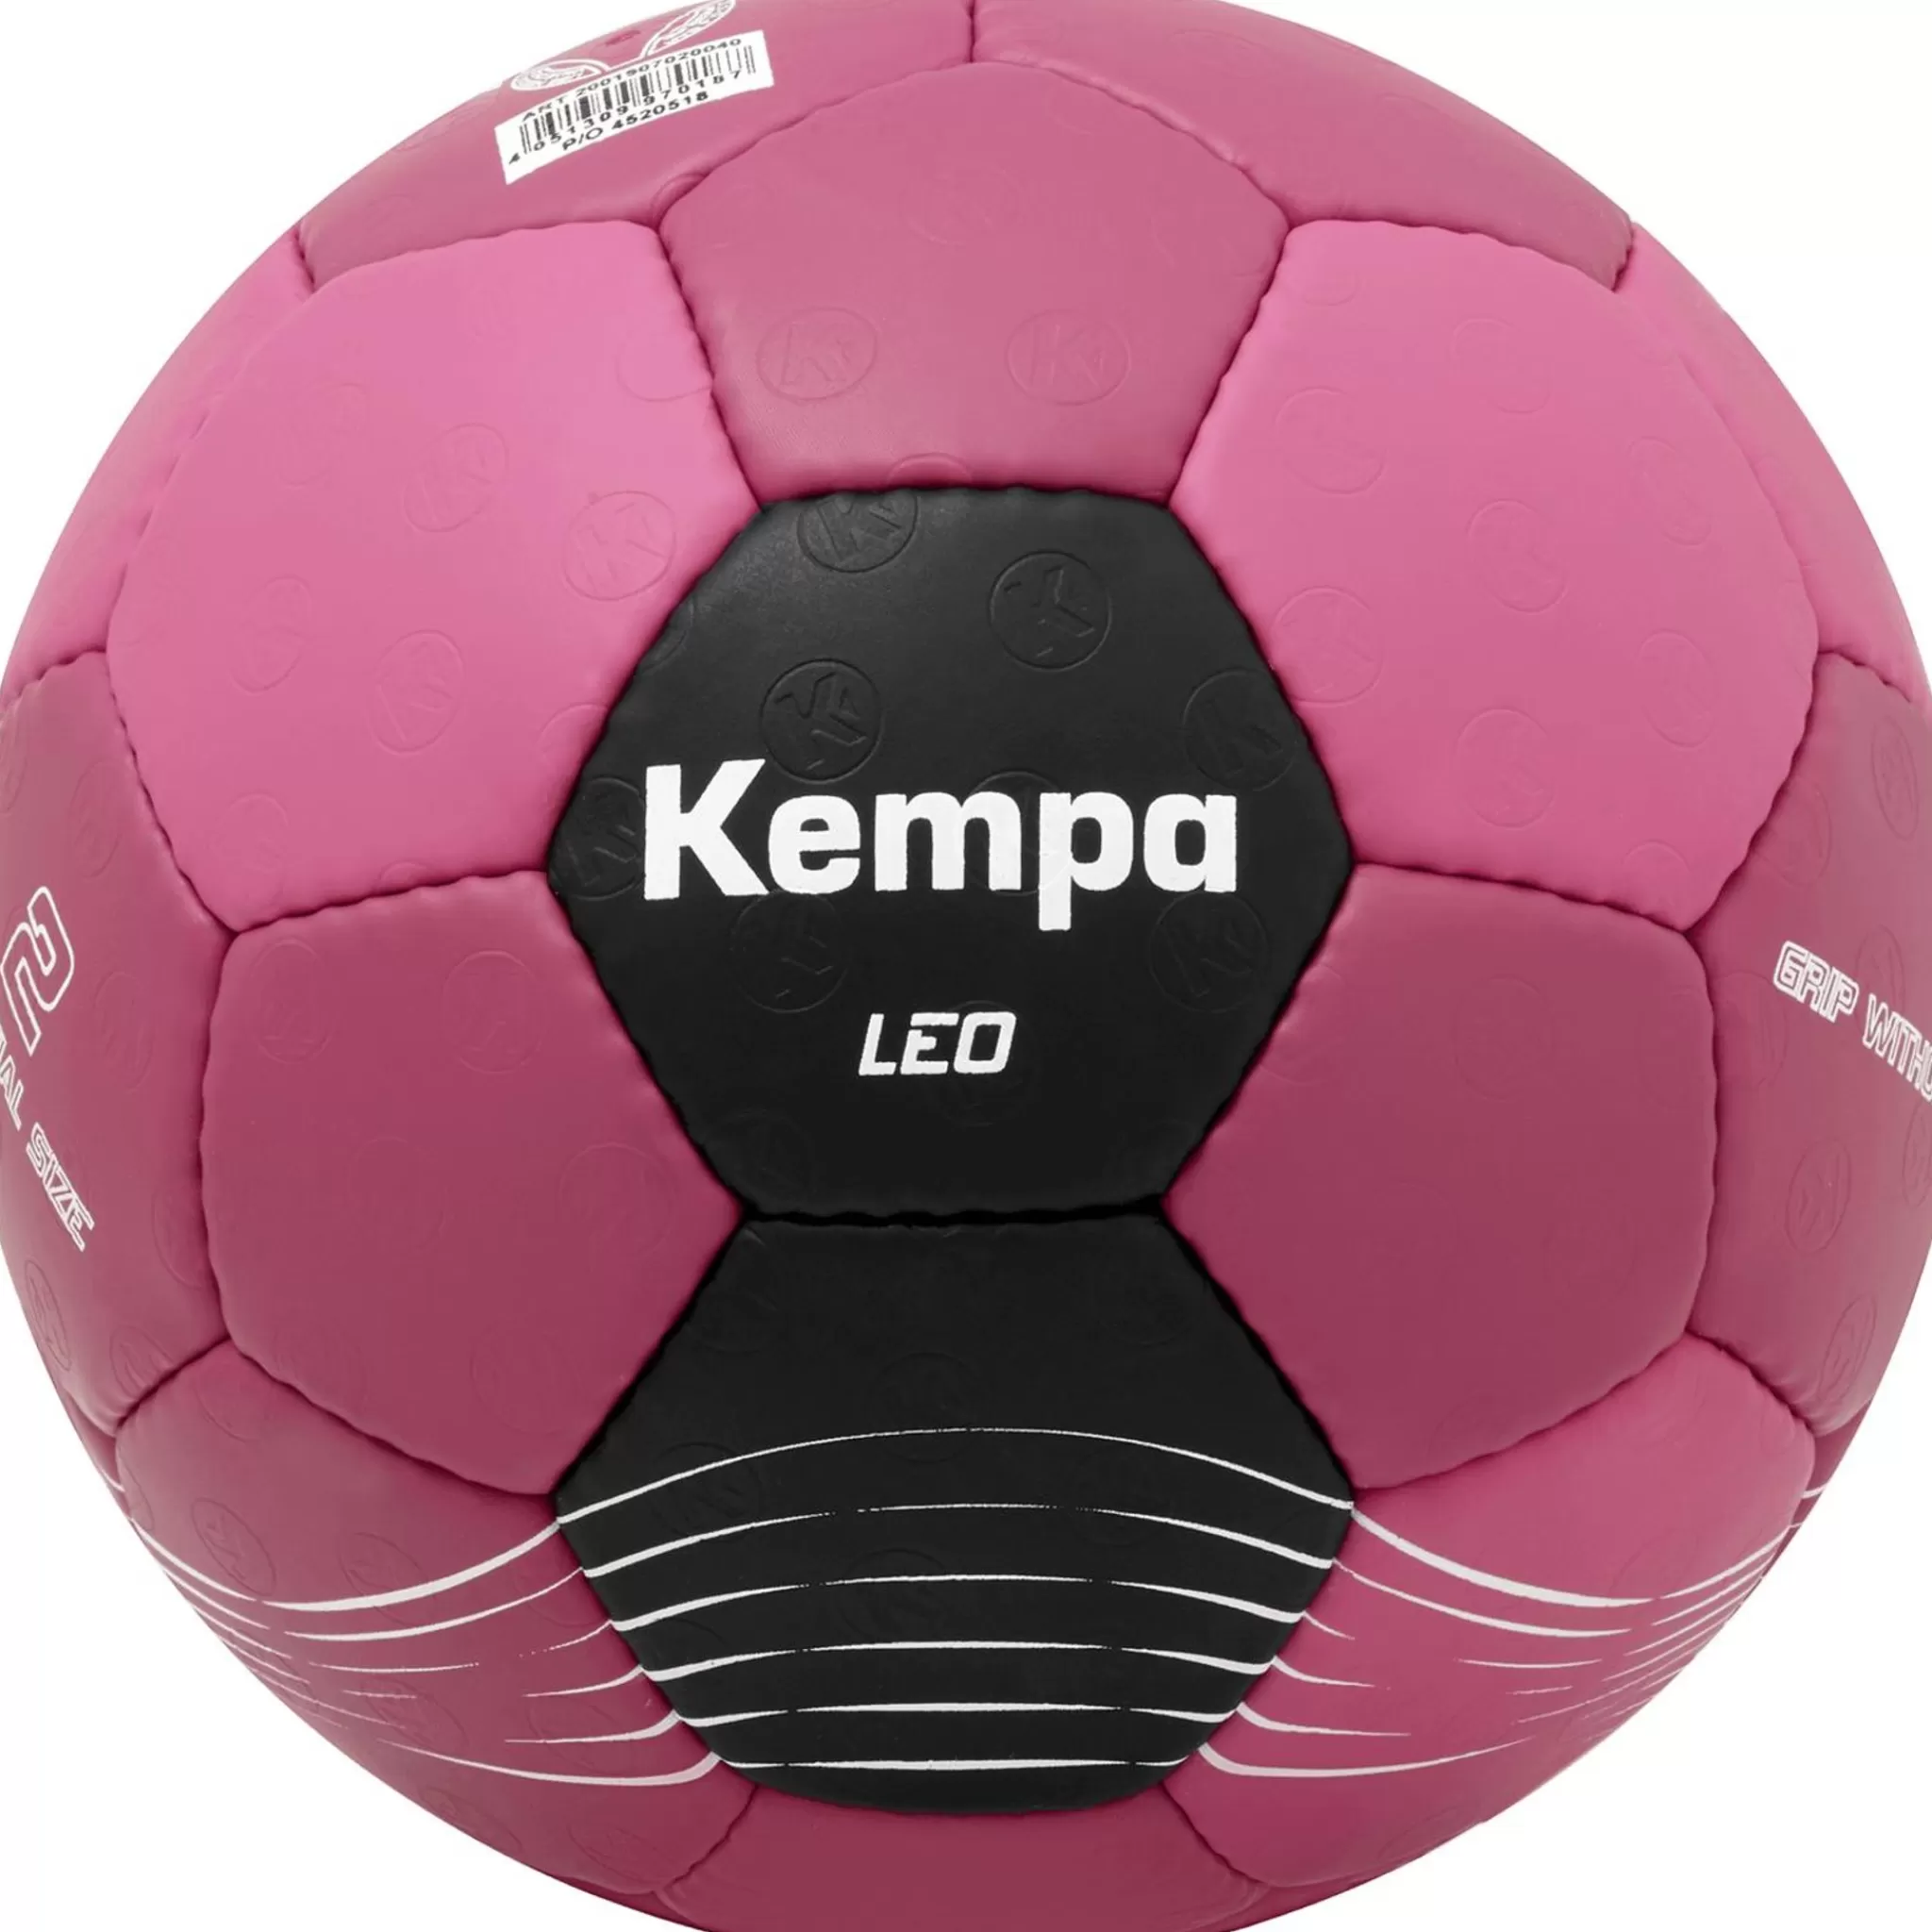 Sale Kempa Leo, Handball